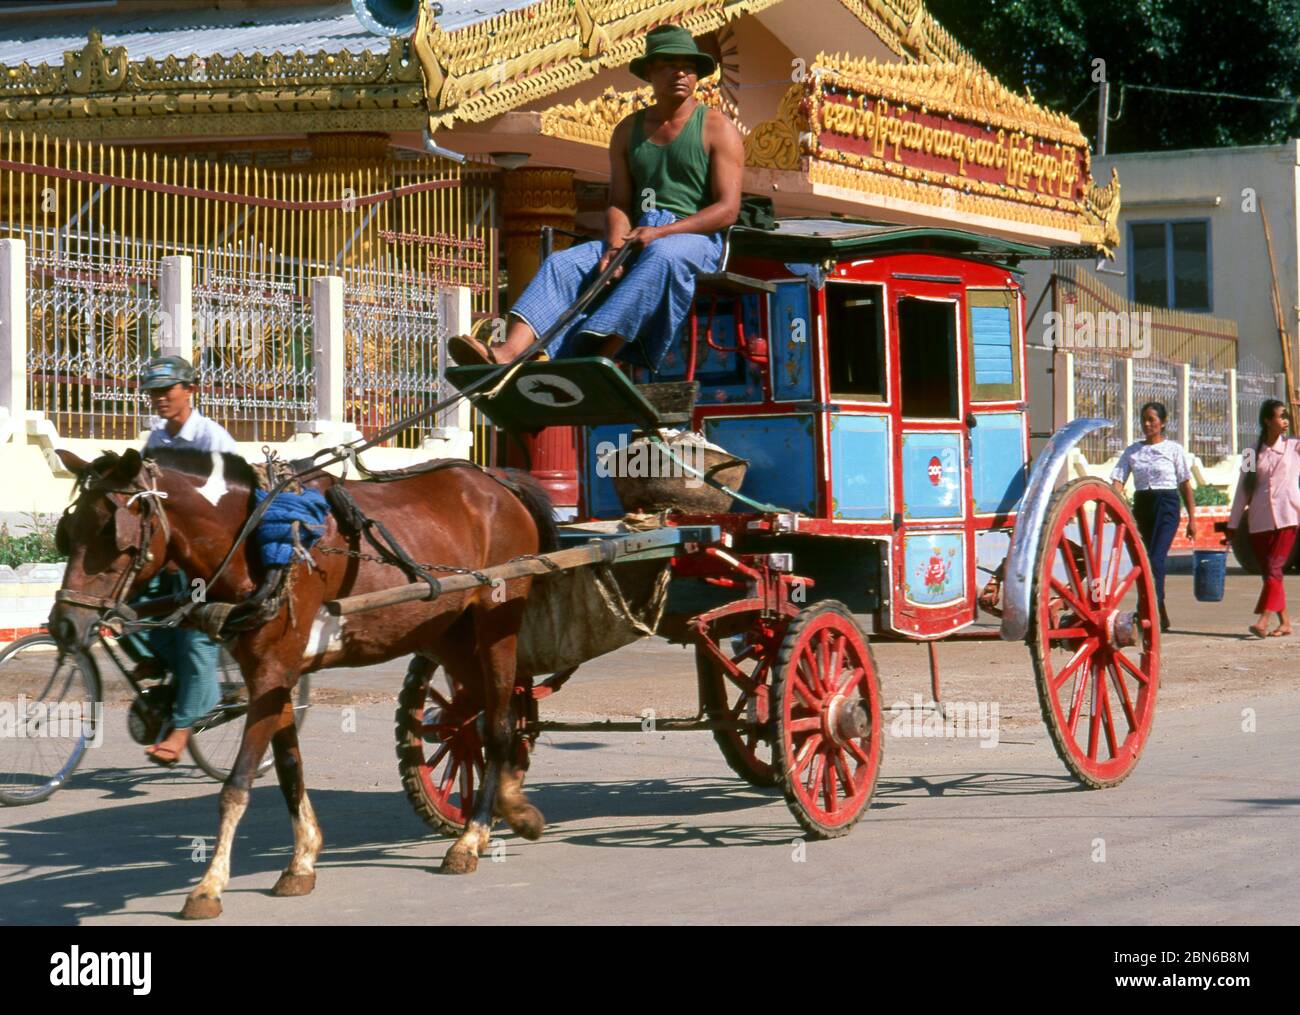 Burma / Myanmar: Horse-drawn carriage, Pyin U Lwin (Maymyo), Mandalay Region.  Pyin U Lwin (Maymyo) began as a military outpost on the Lashio-Mandalay Stock Photo